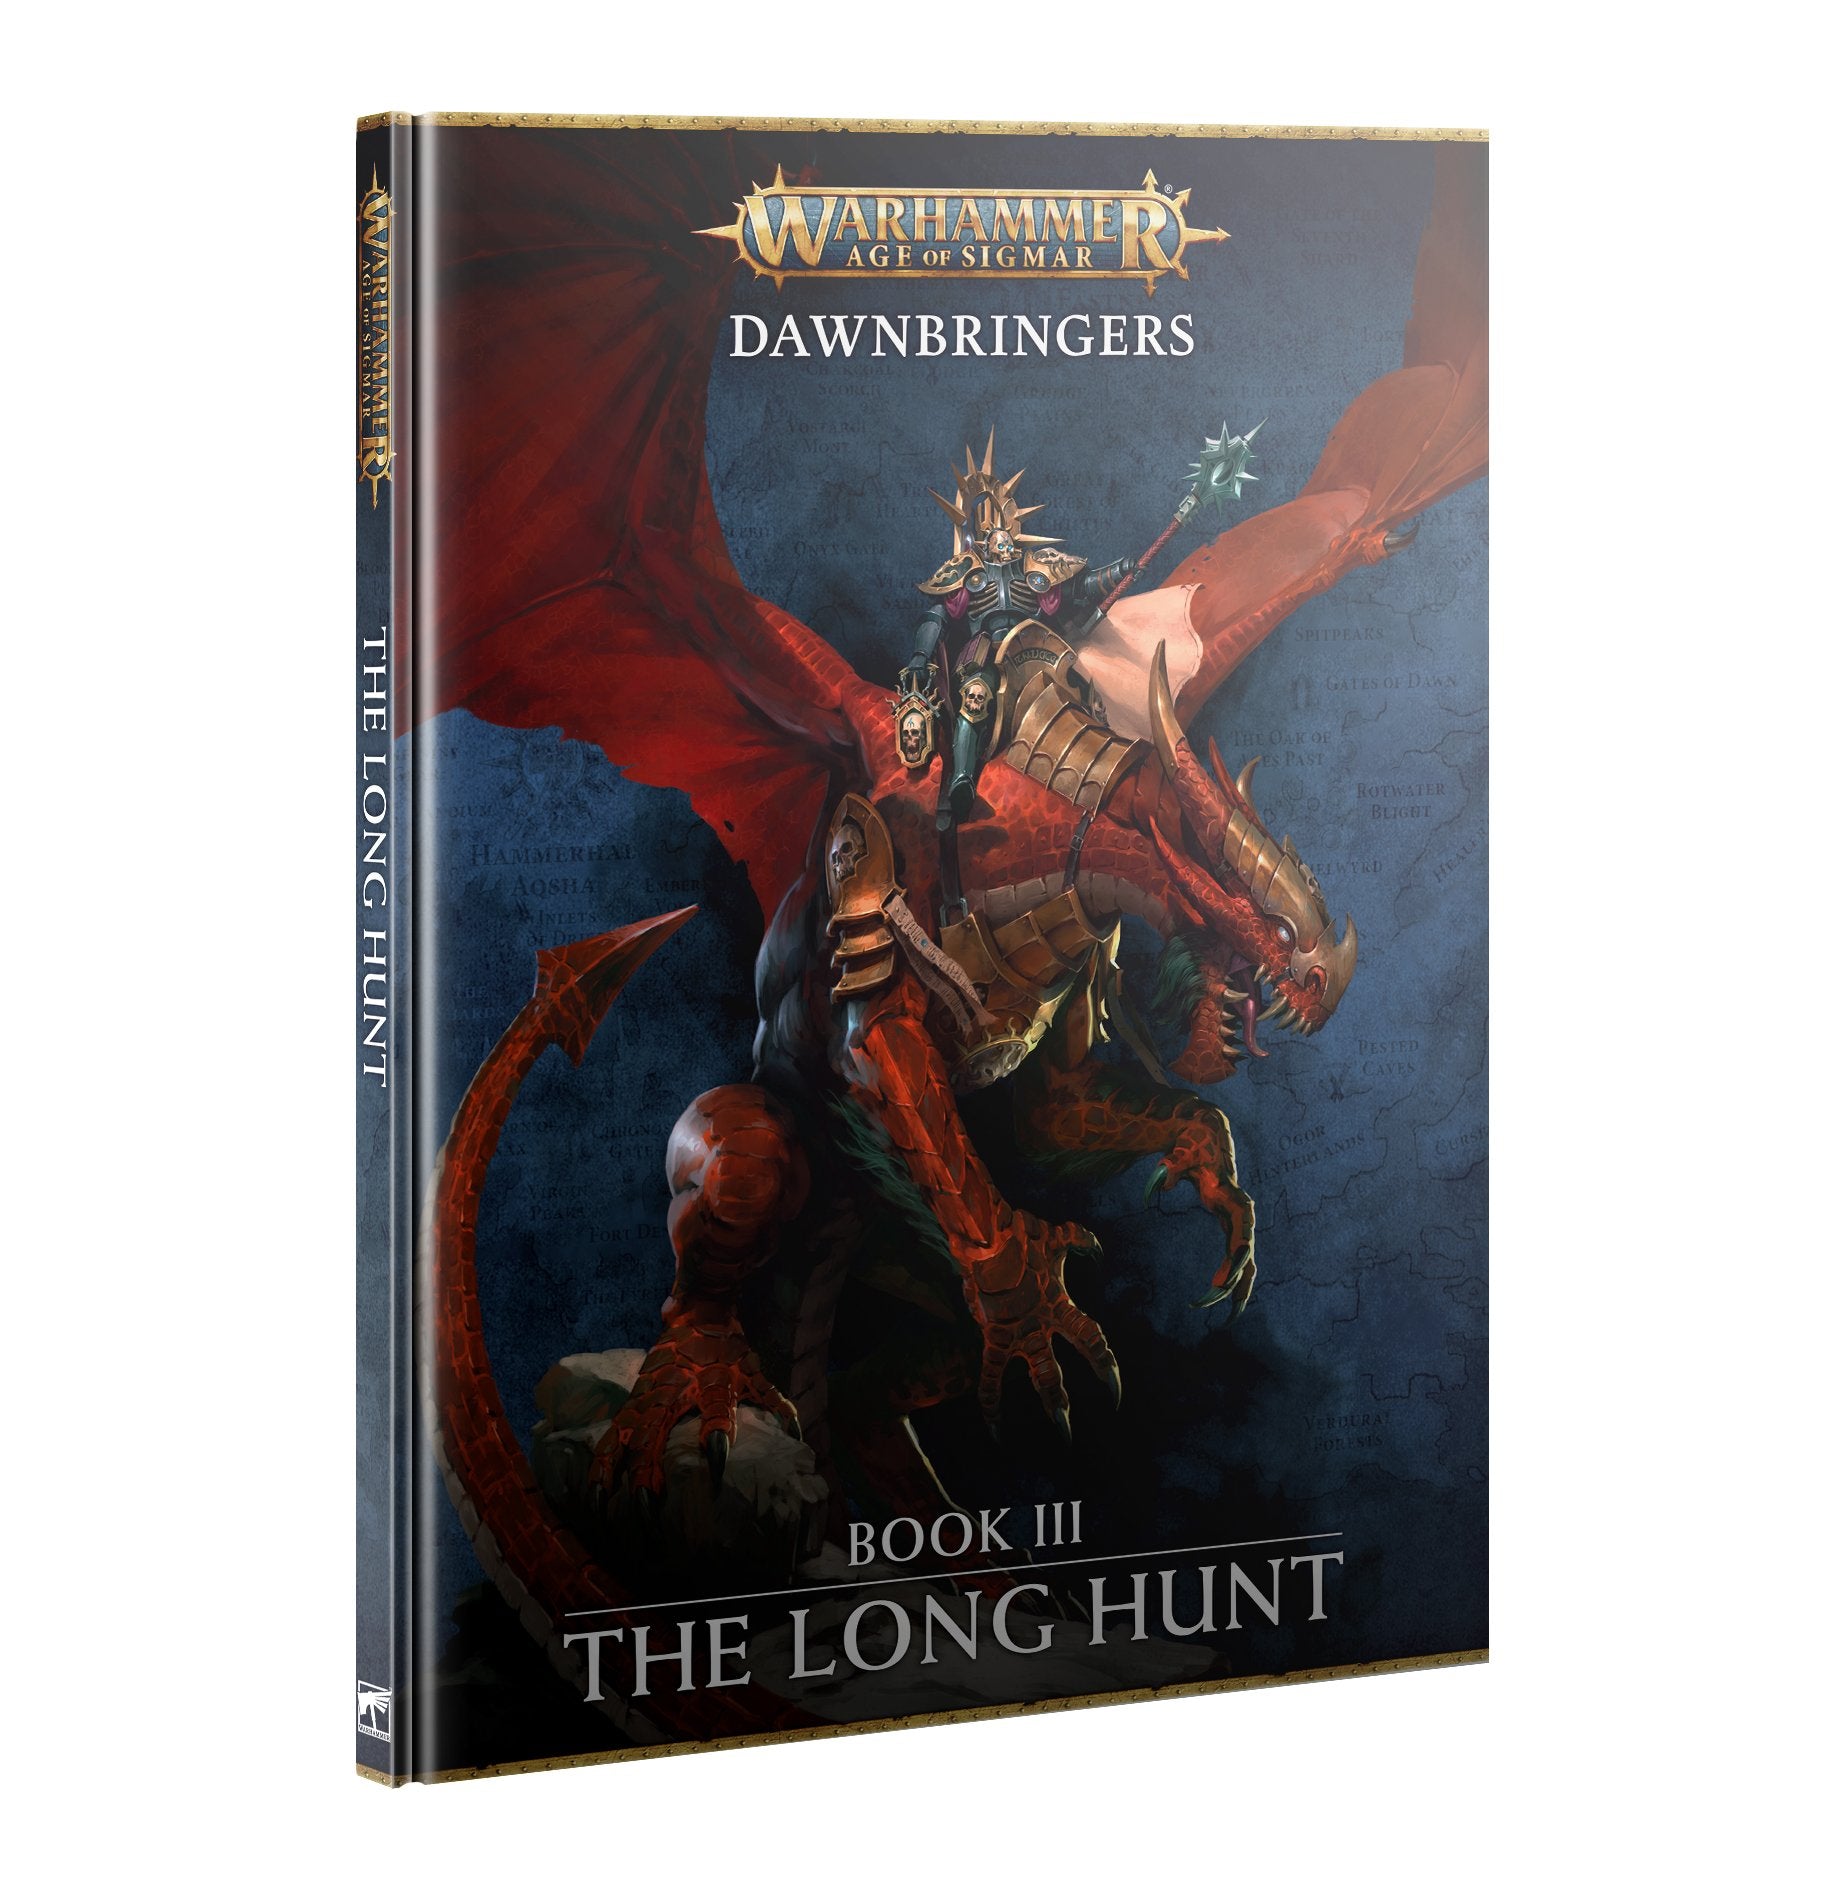 Dawnbringers The Long Hunt-Age of Sigmar Book